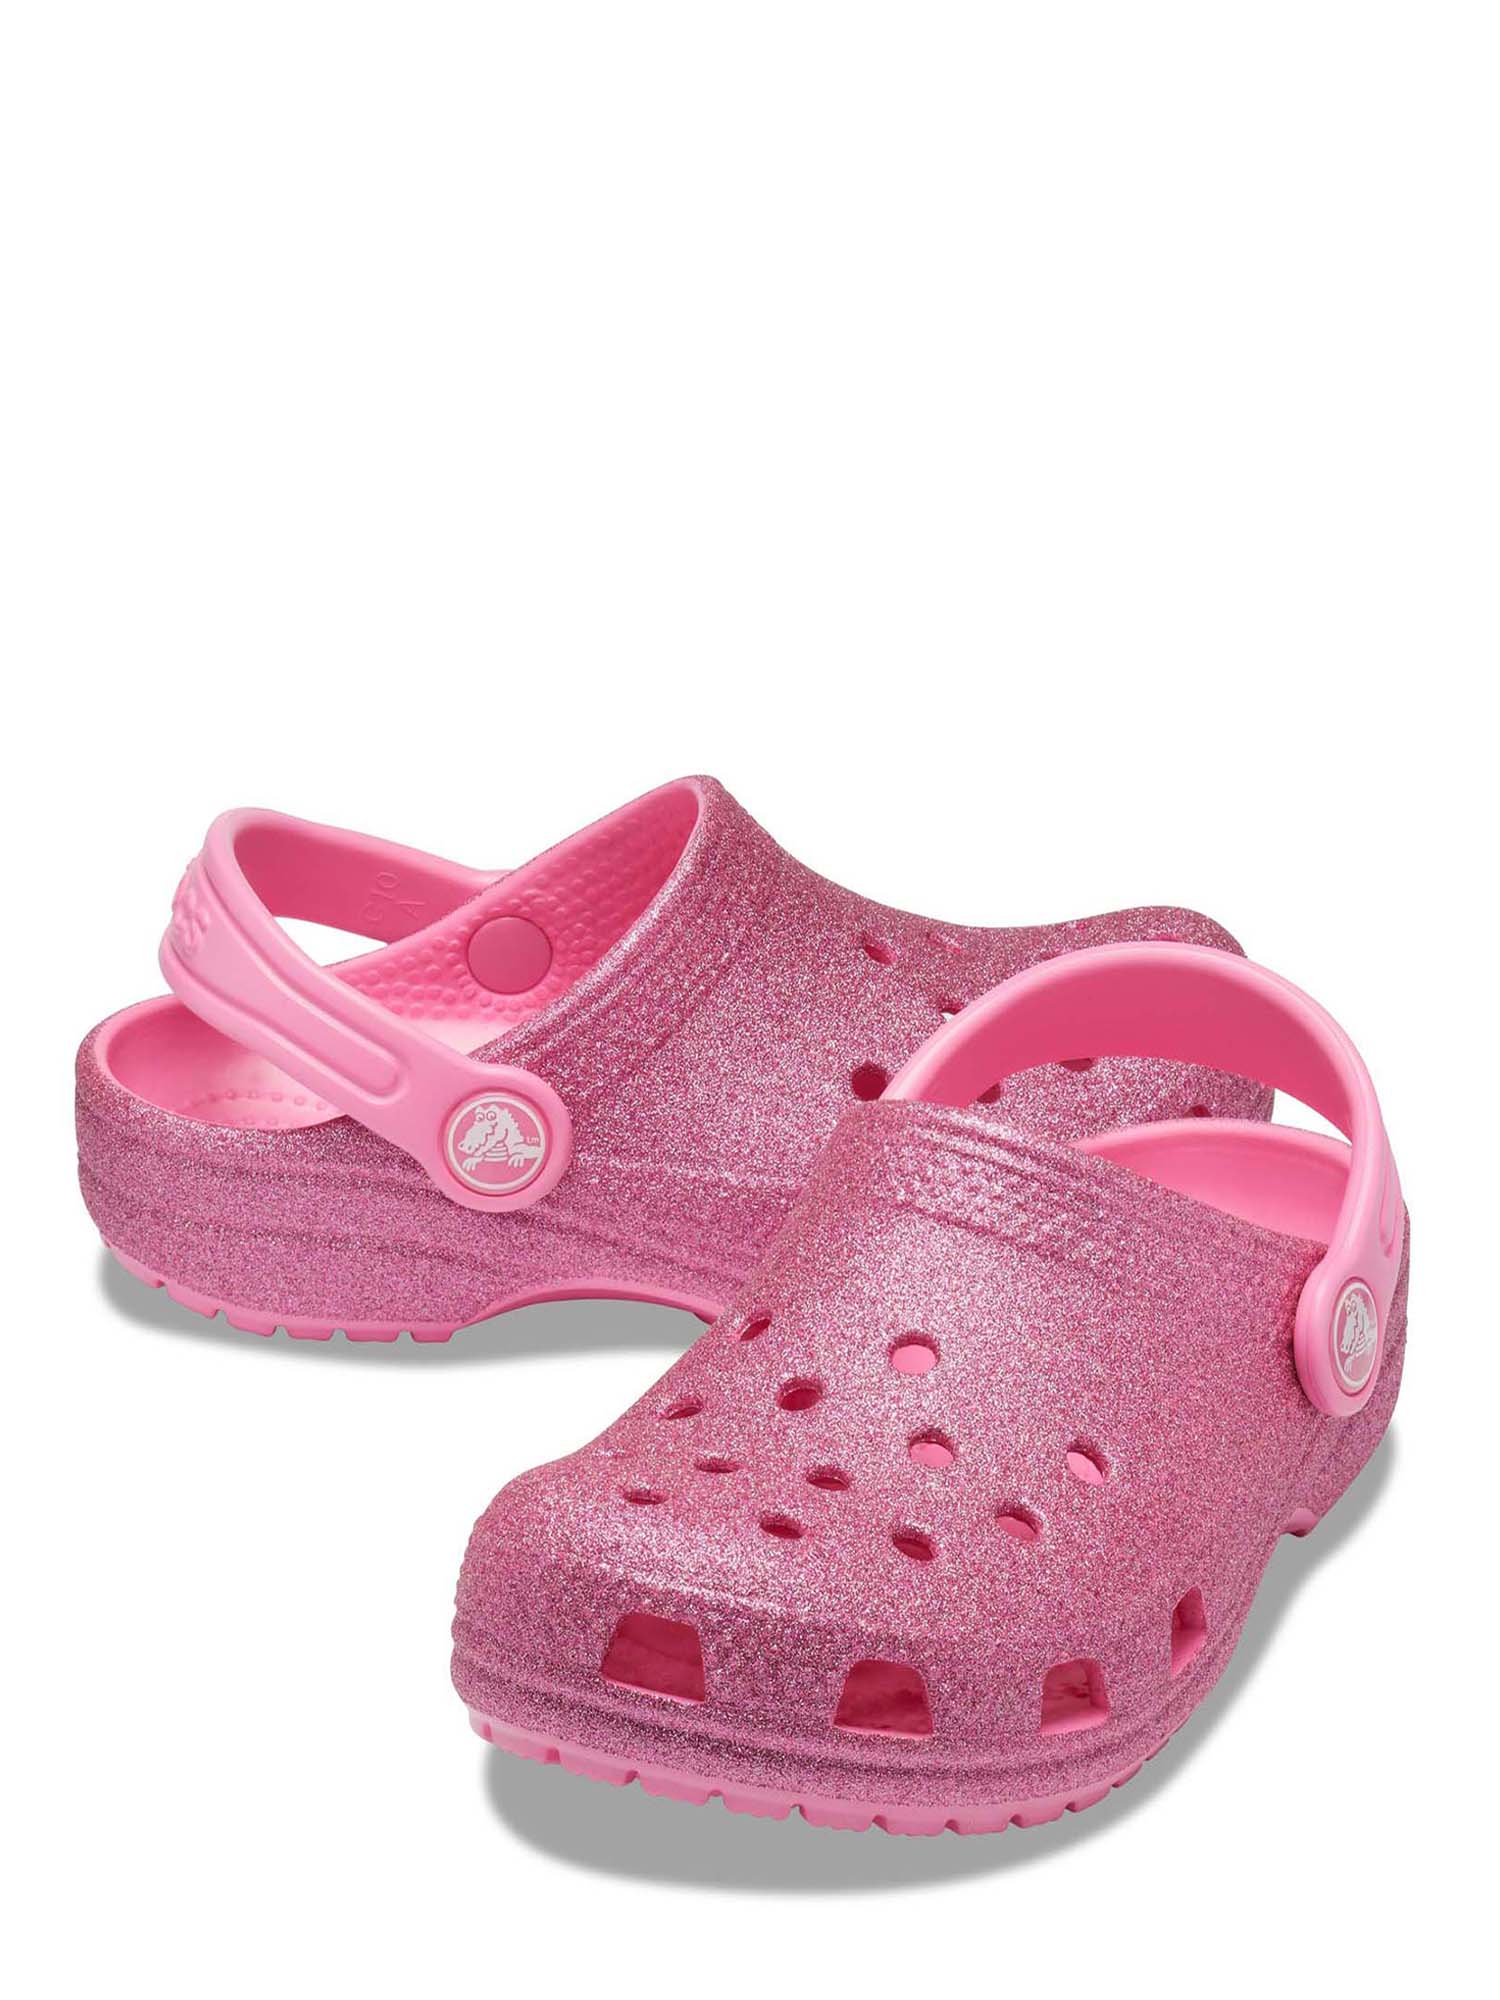 Crocs Toddler & Kids Classic Glitter Clog, Sizes 4-6 - image 3 of 4